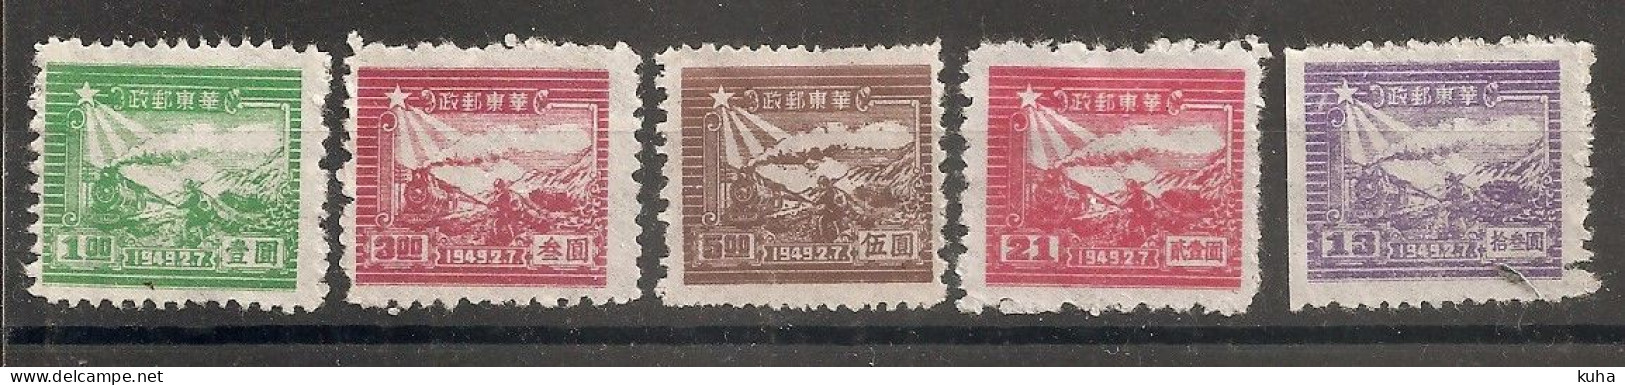 China Chine 1949 North China  MH & MNH - Nordchina 1949-50